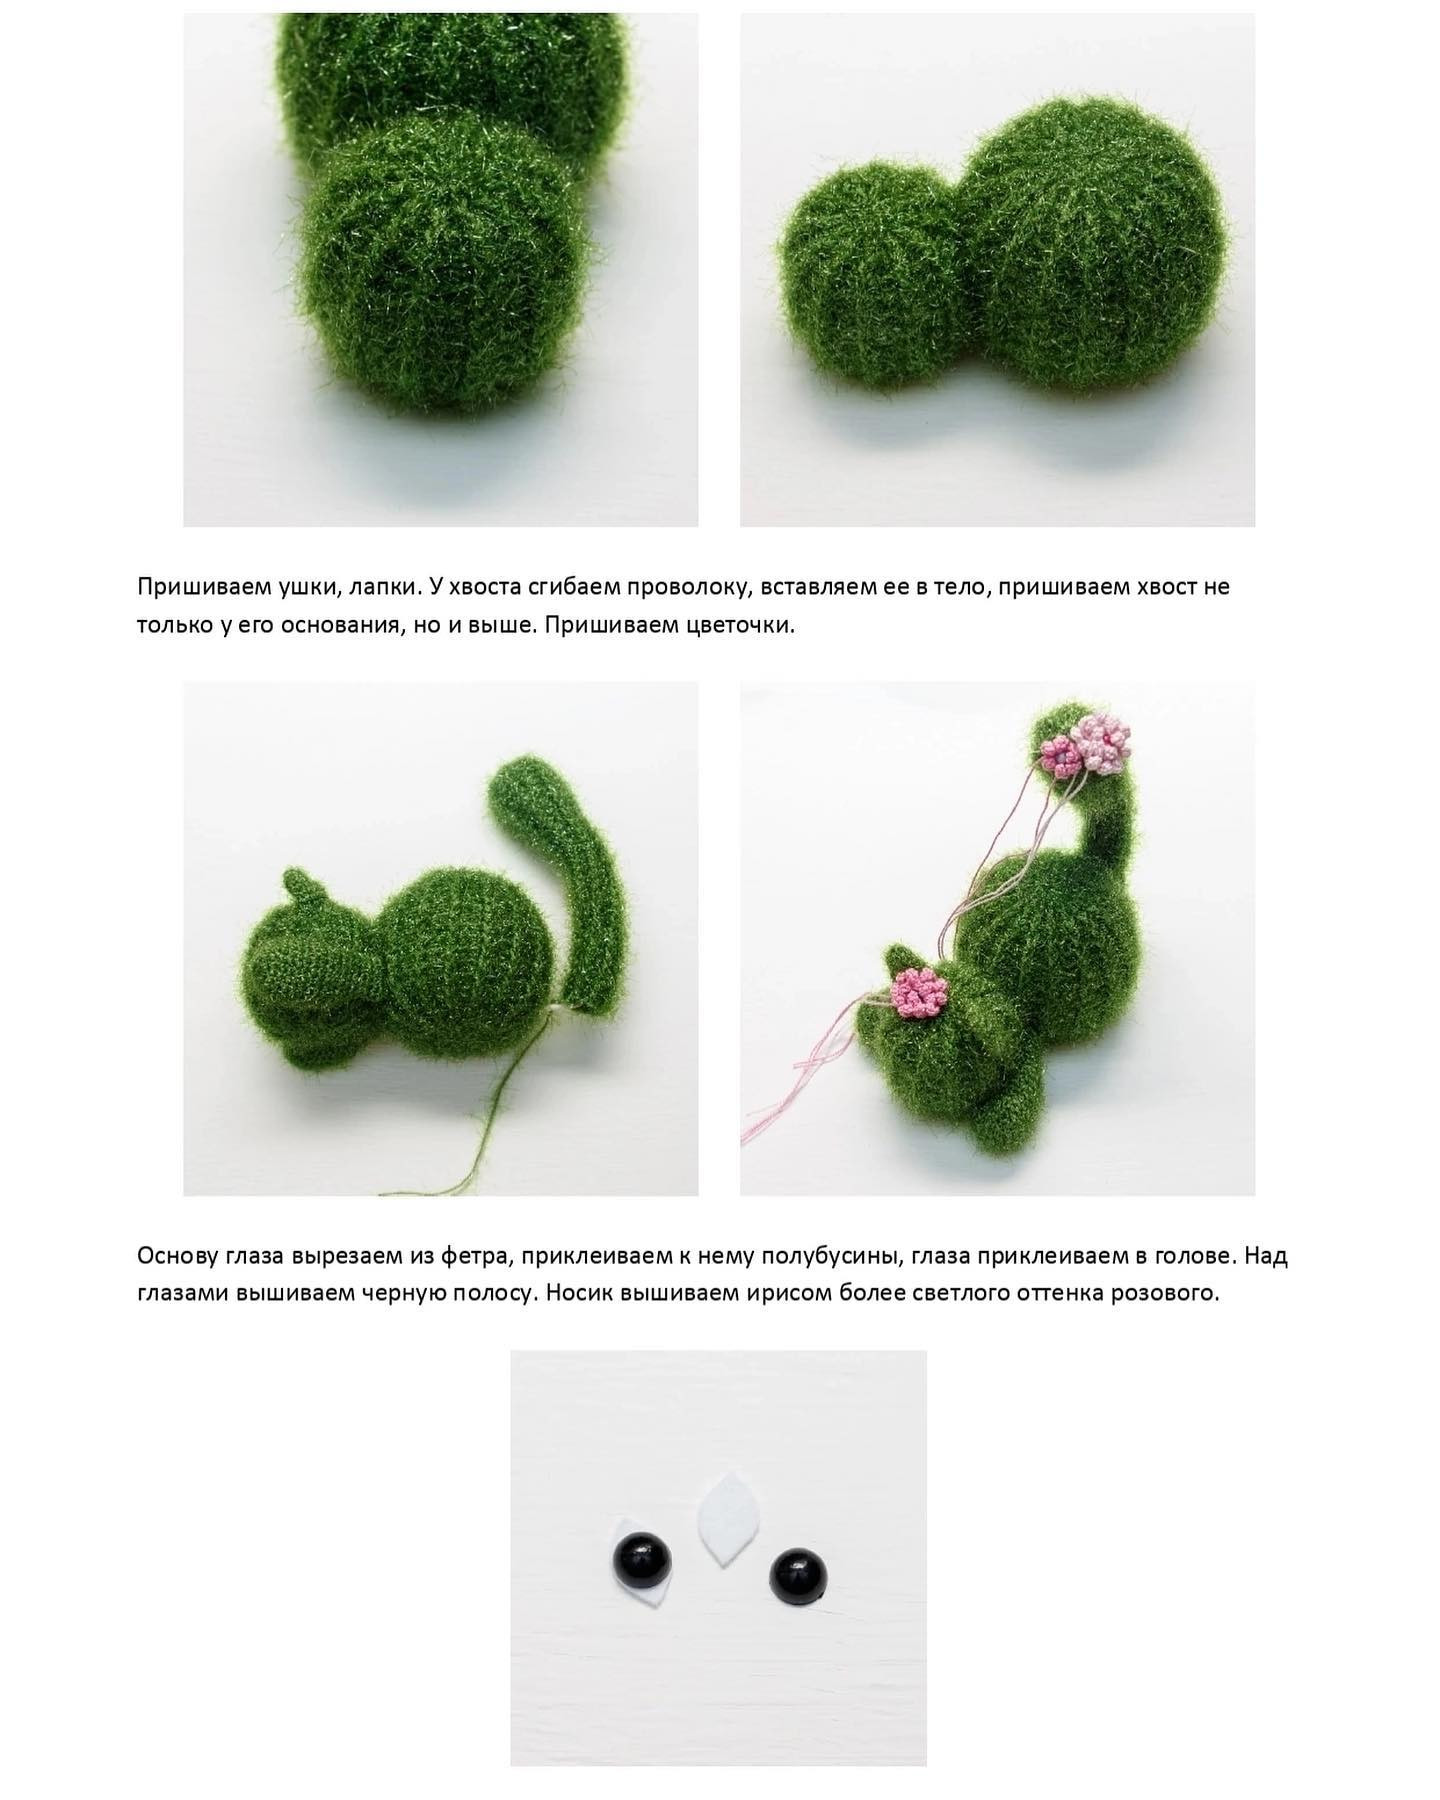 green cat pink bow crochet pattern